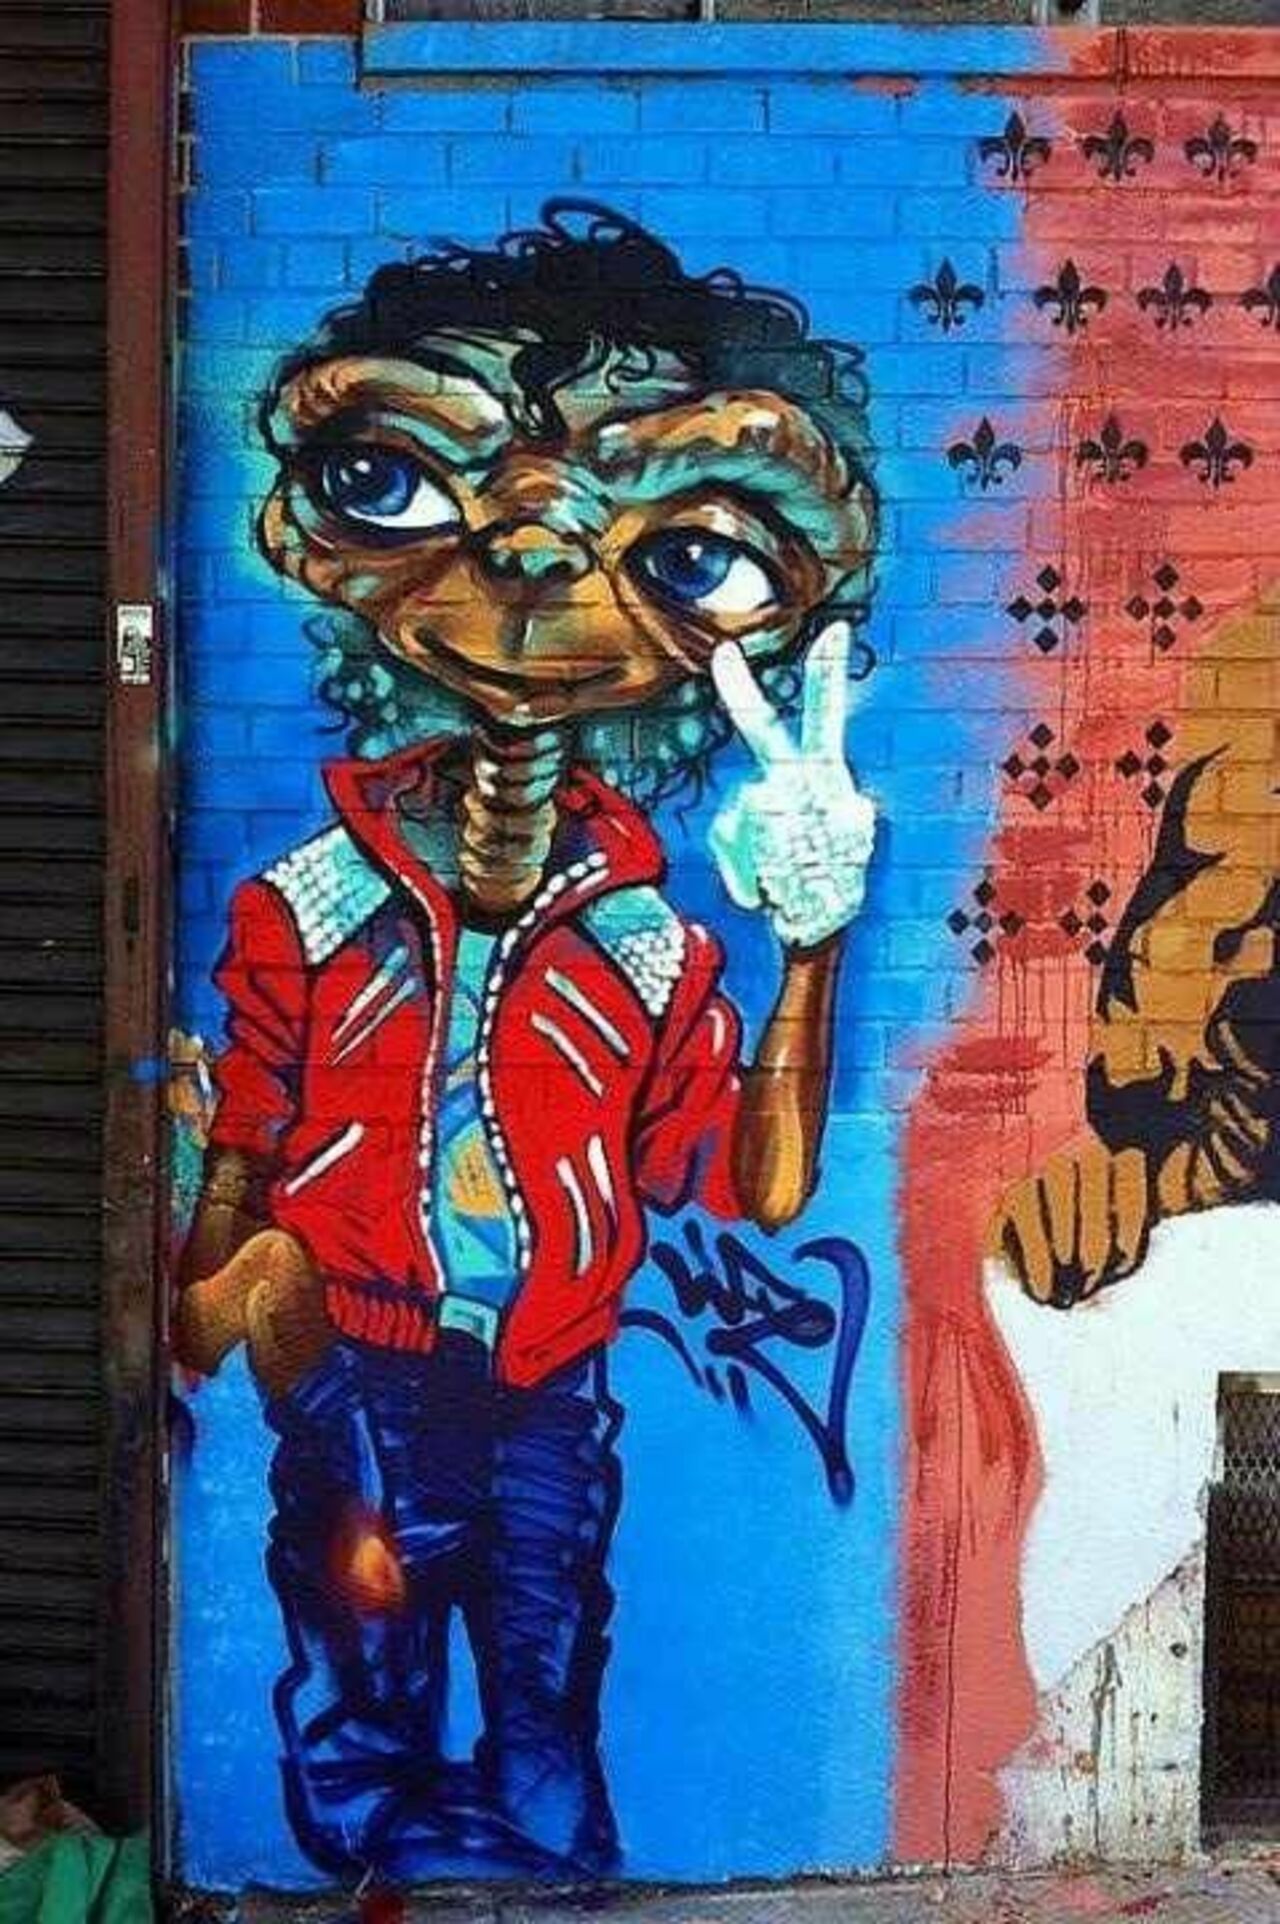 ET Michael Jackson mural. IDK the artist#streetart #mural #graffiti #art https://t.co/NhOuckJXQt